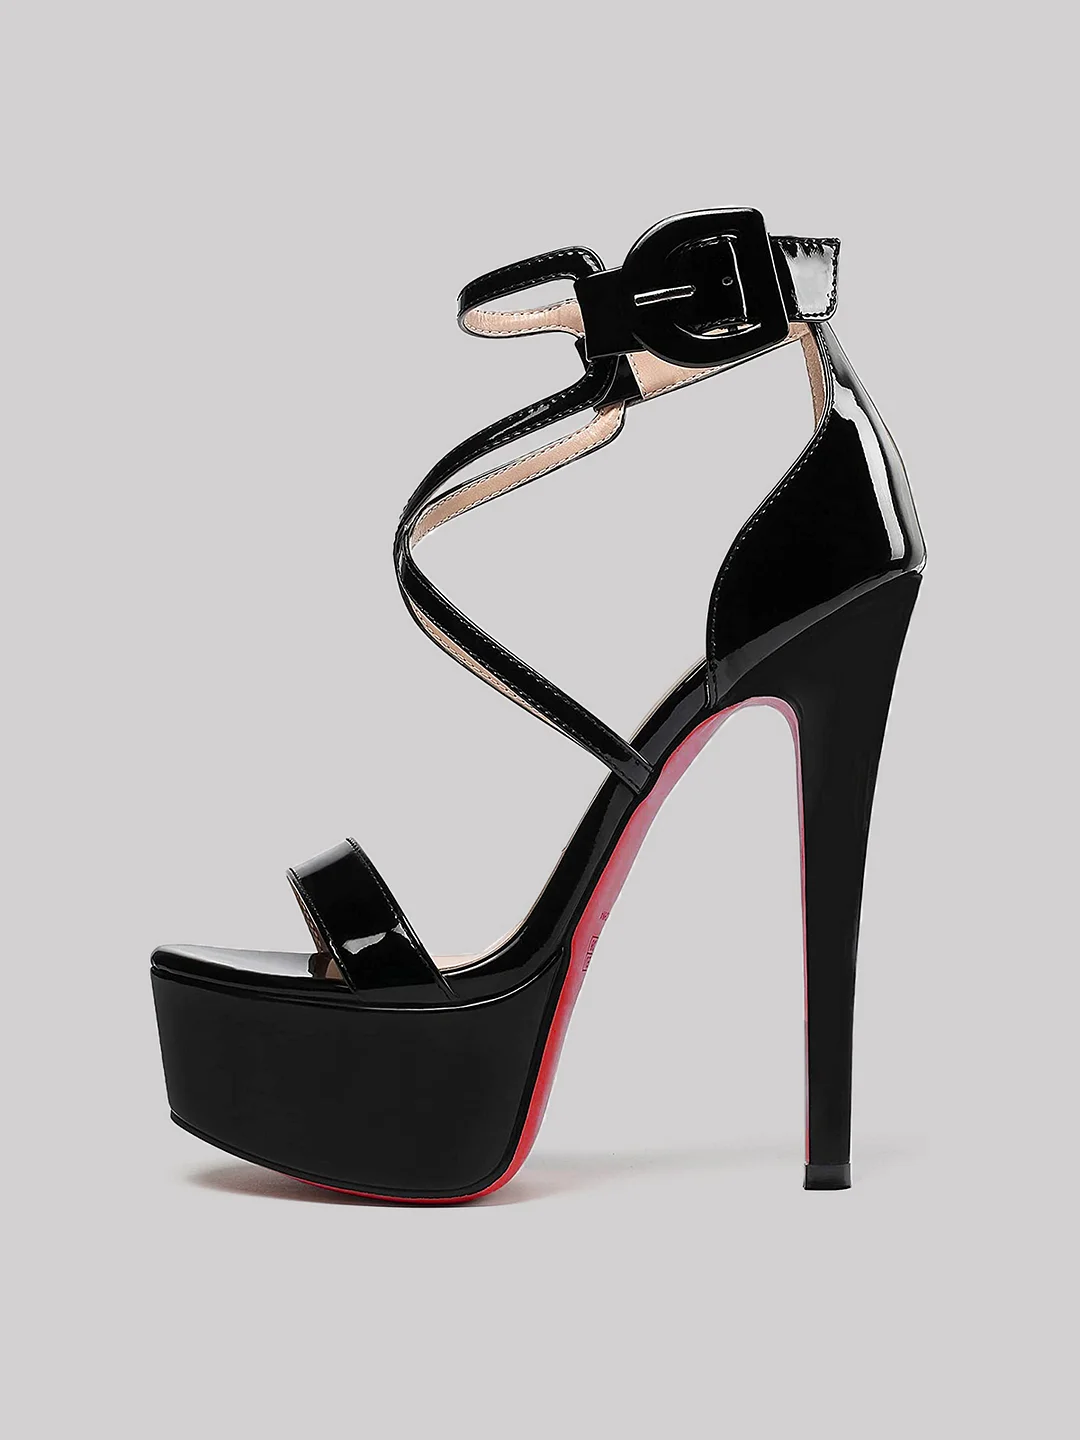 150mm Women's Open Toe Platform Sandals Ankle Strap High Heel Patent Red Bottom Summer Shoes